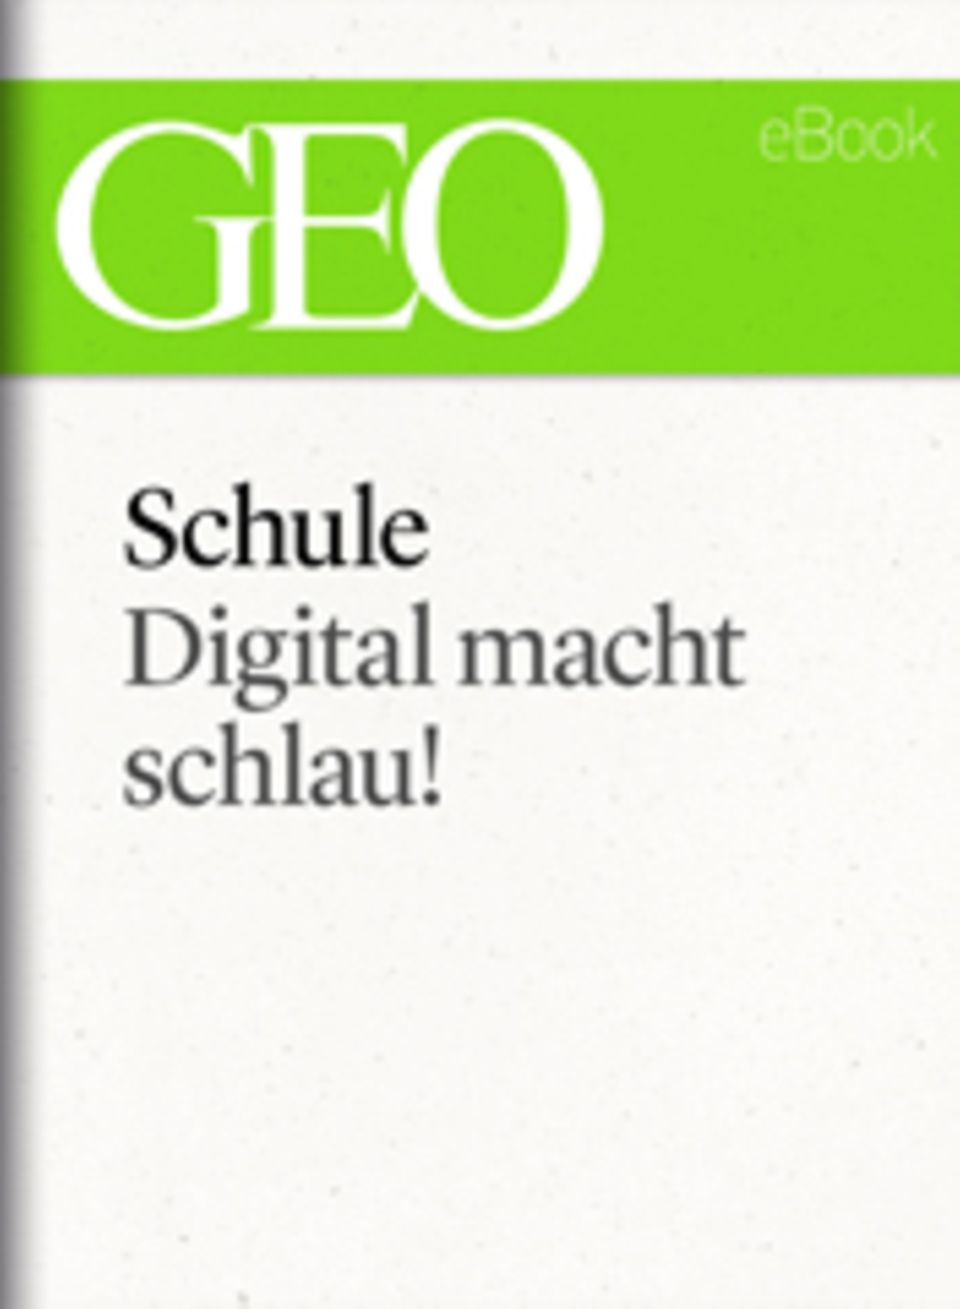 Digital macht schlau: GEO eBook "Schule"